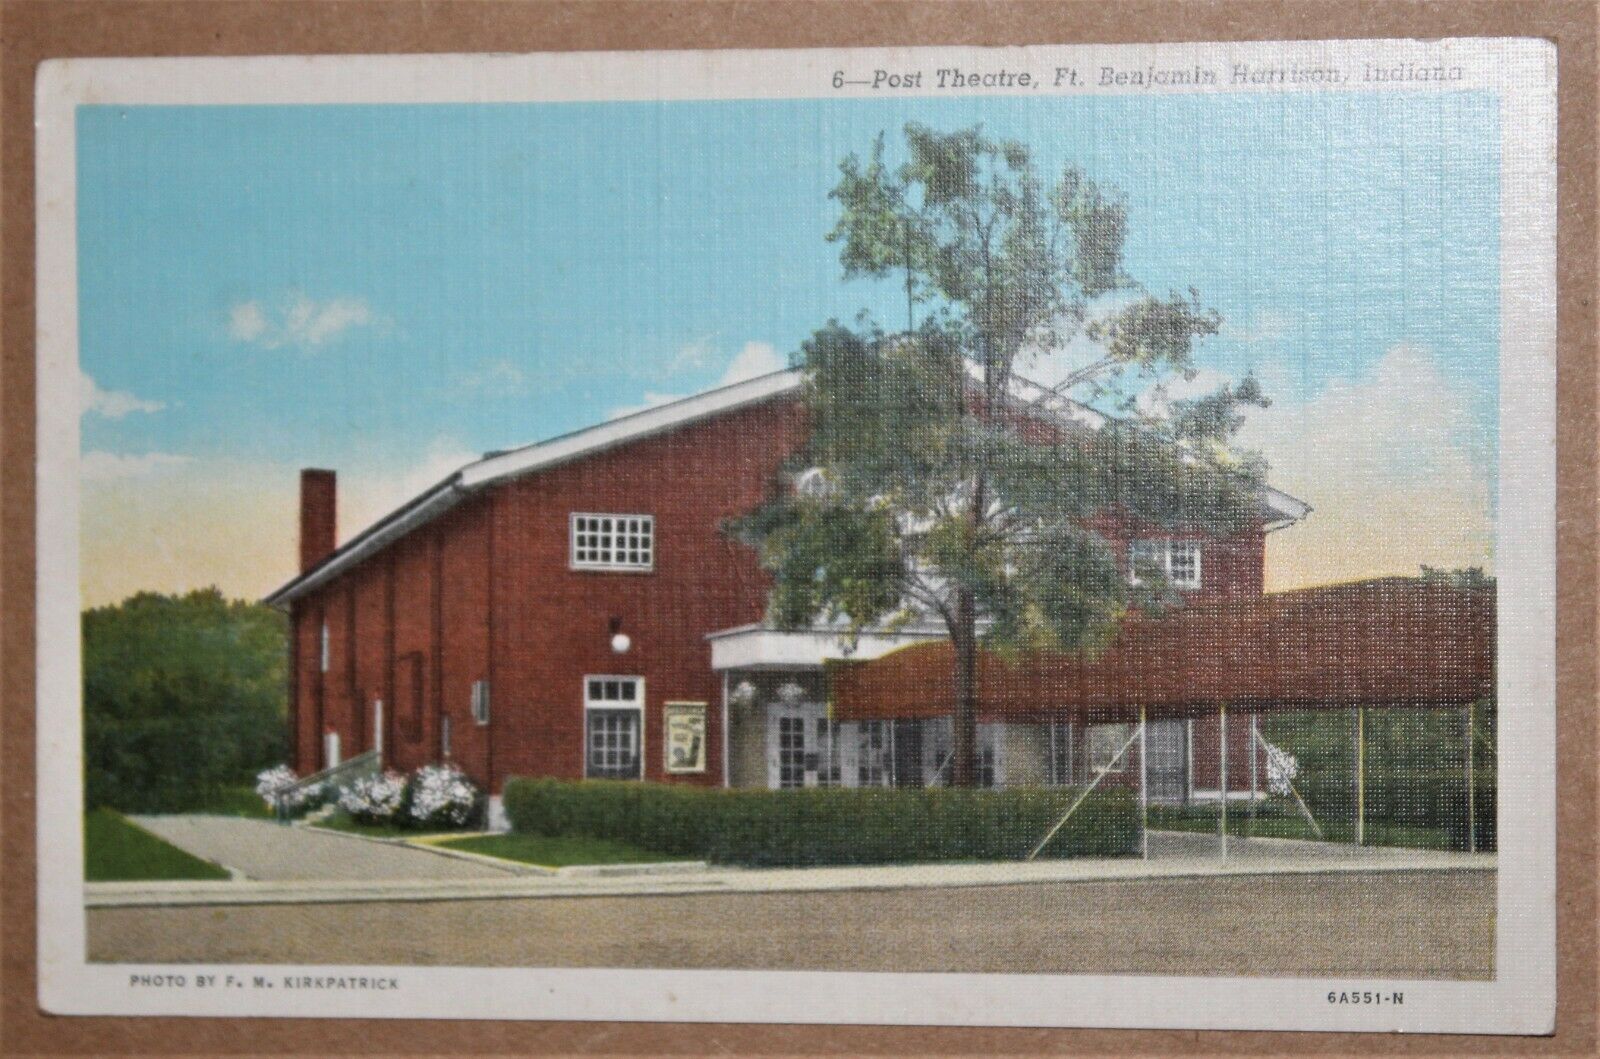 1930 - 1945 Postcard Of The Post Theatre, Fort Benjamin Harrison, In